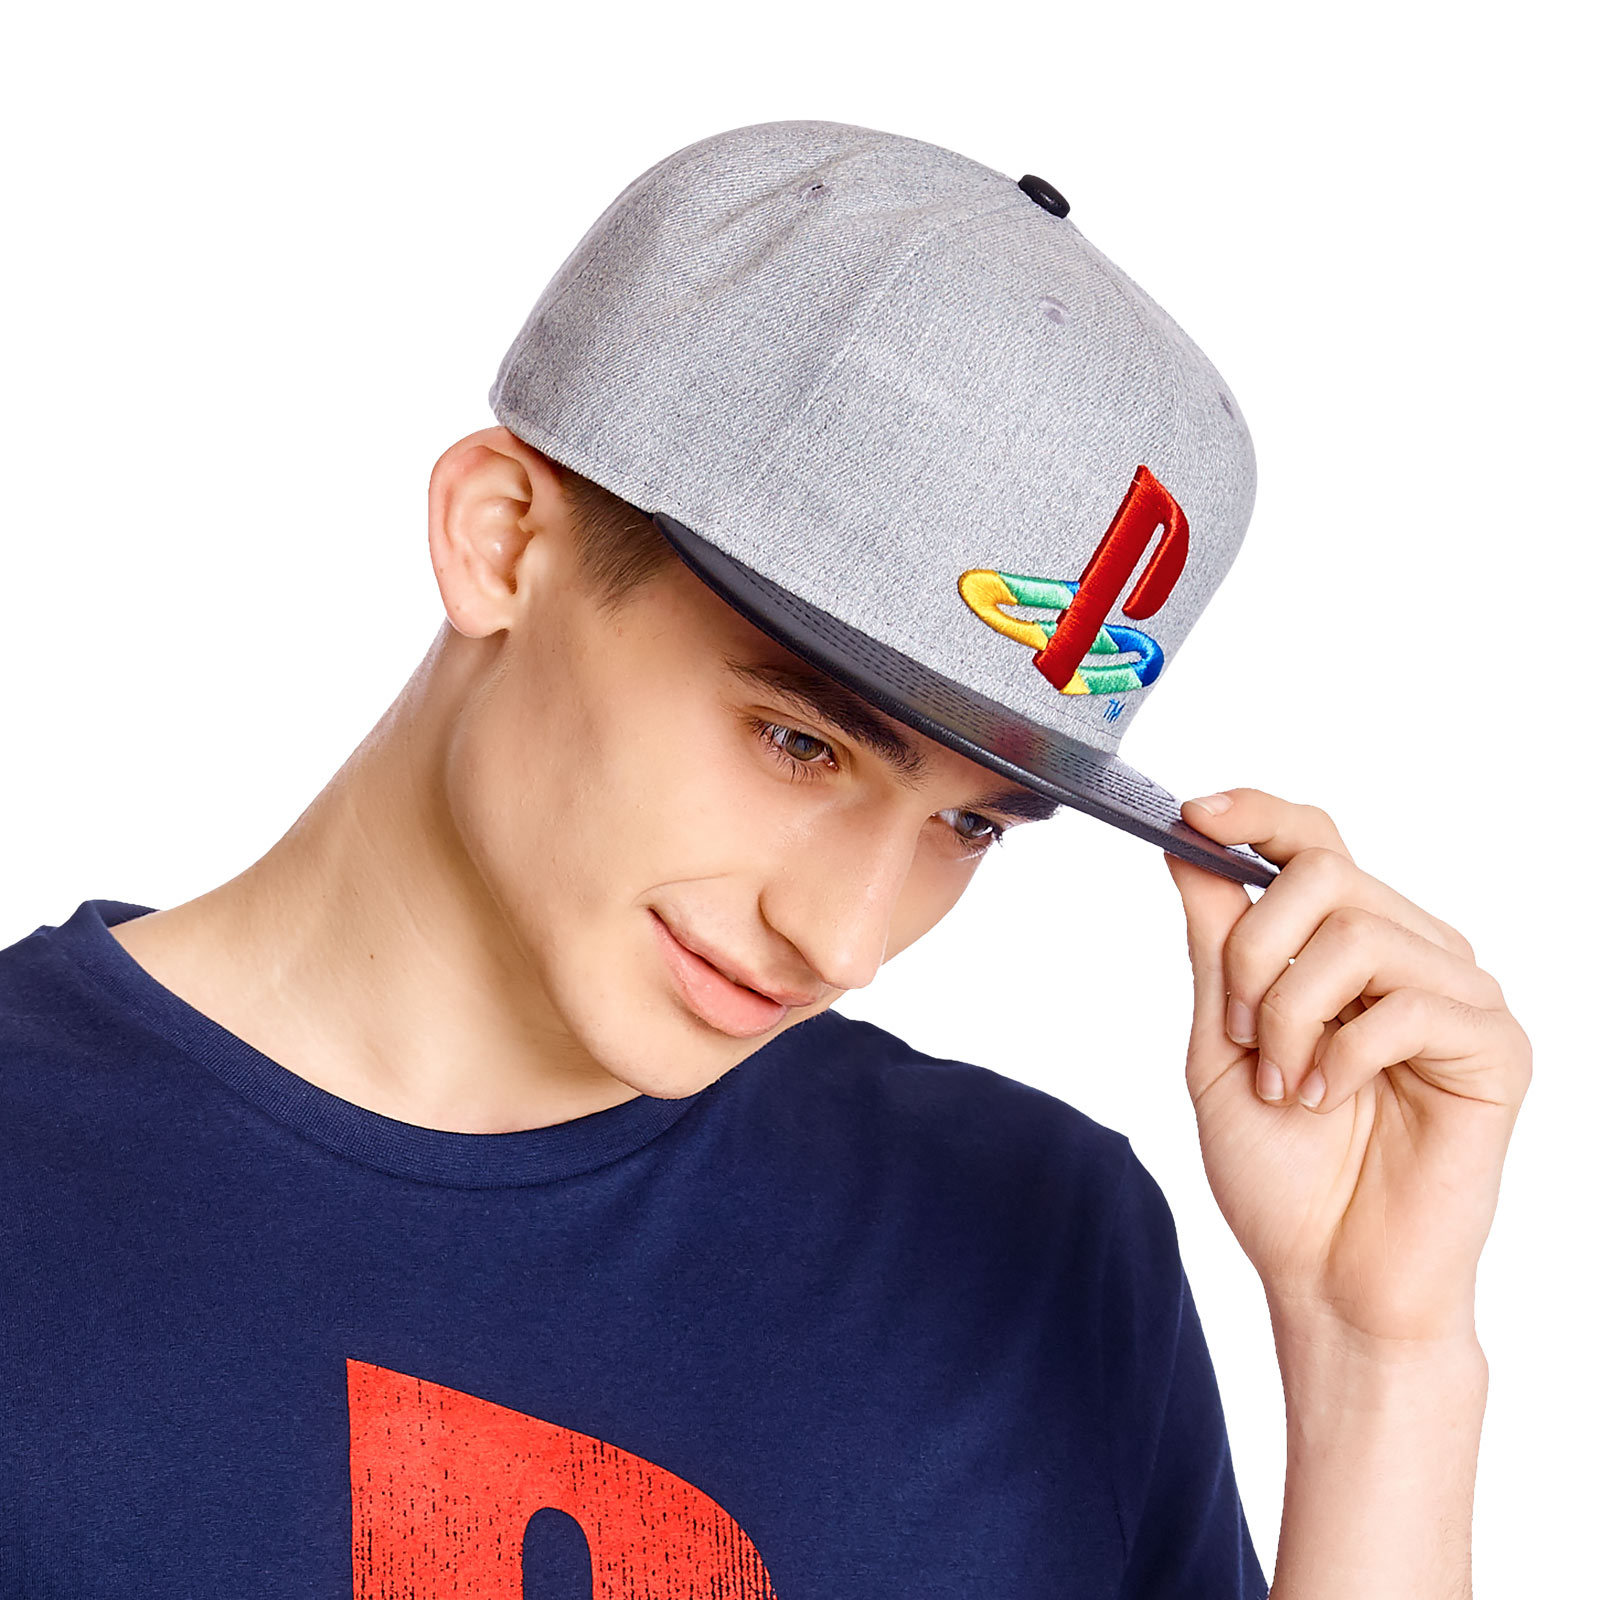 PlayStation - Logo Snapback Cap grau